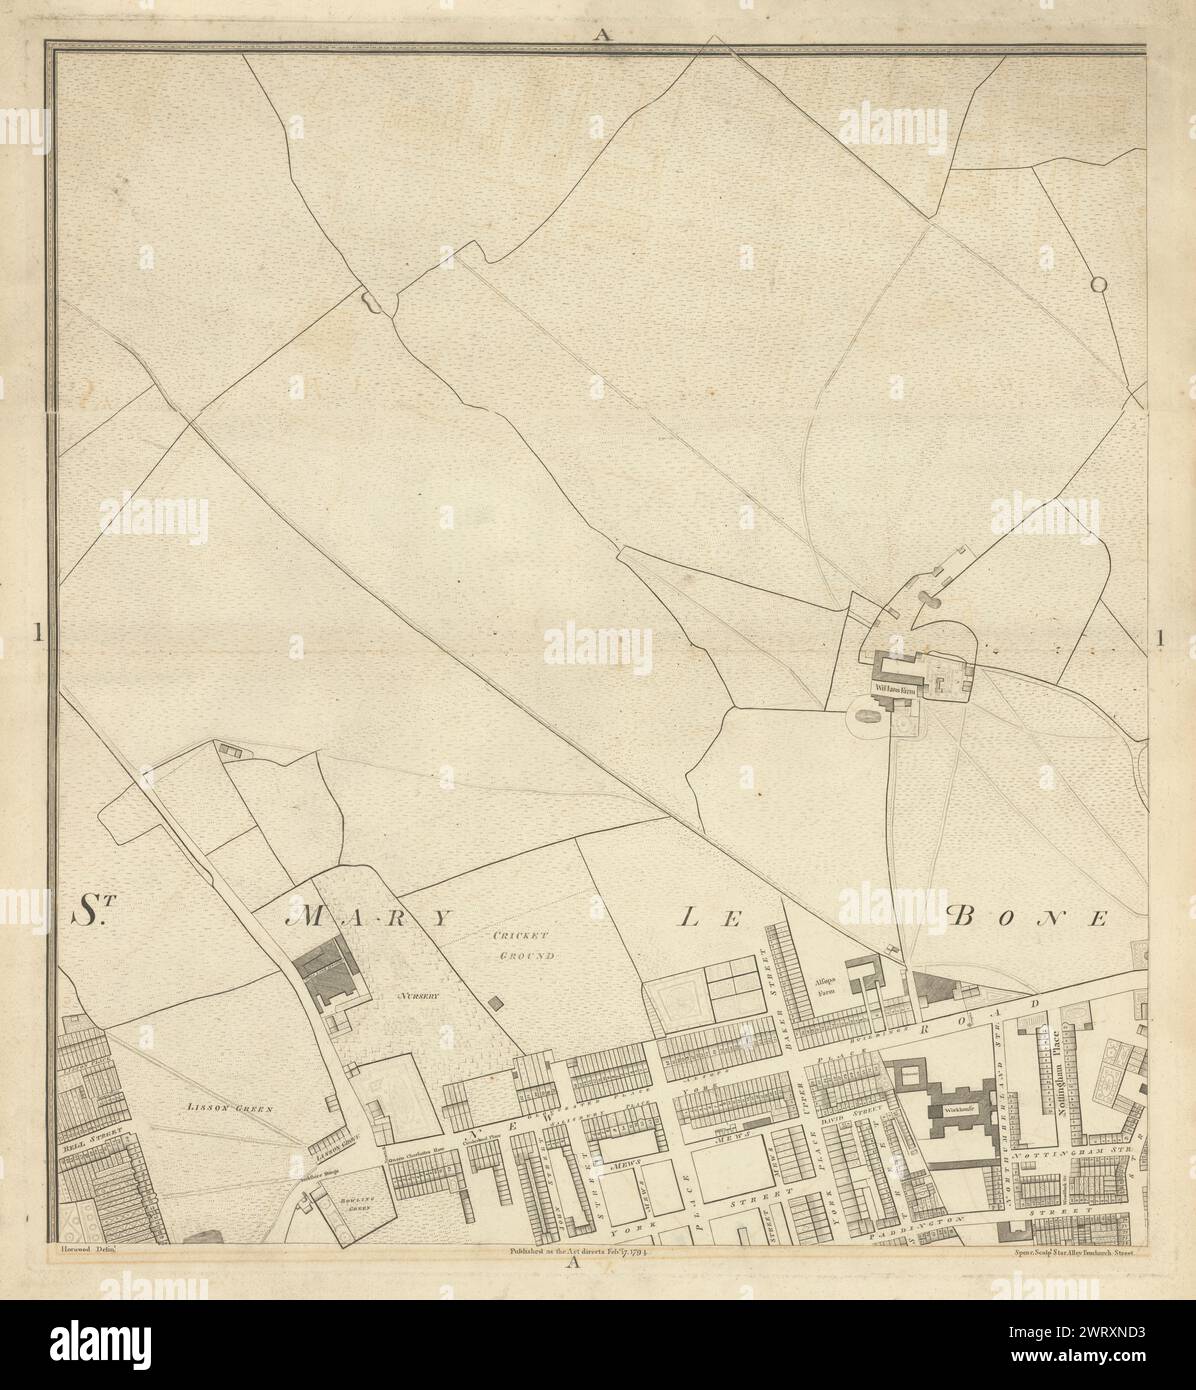 Horwood London A1 Marylebone Road Lisson Grove Regents Park Baker St 1794 map Stock Photo